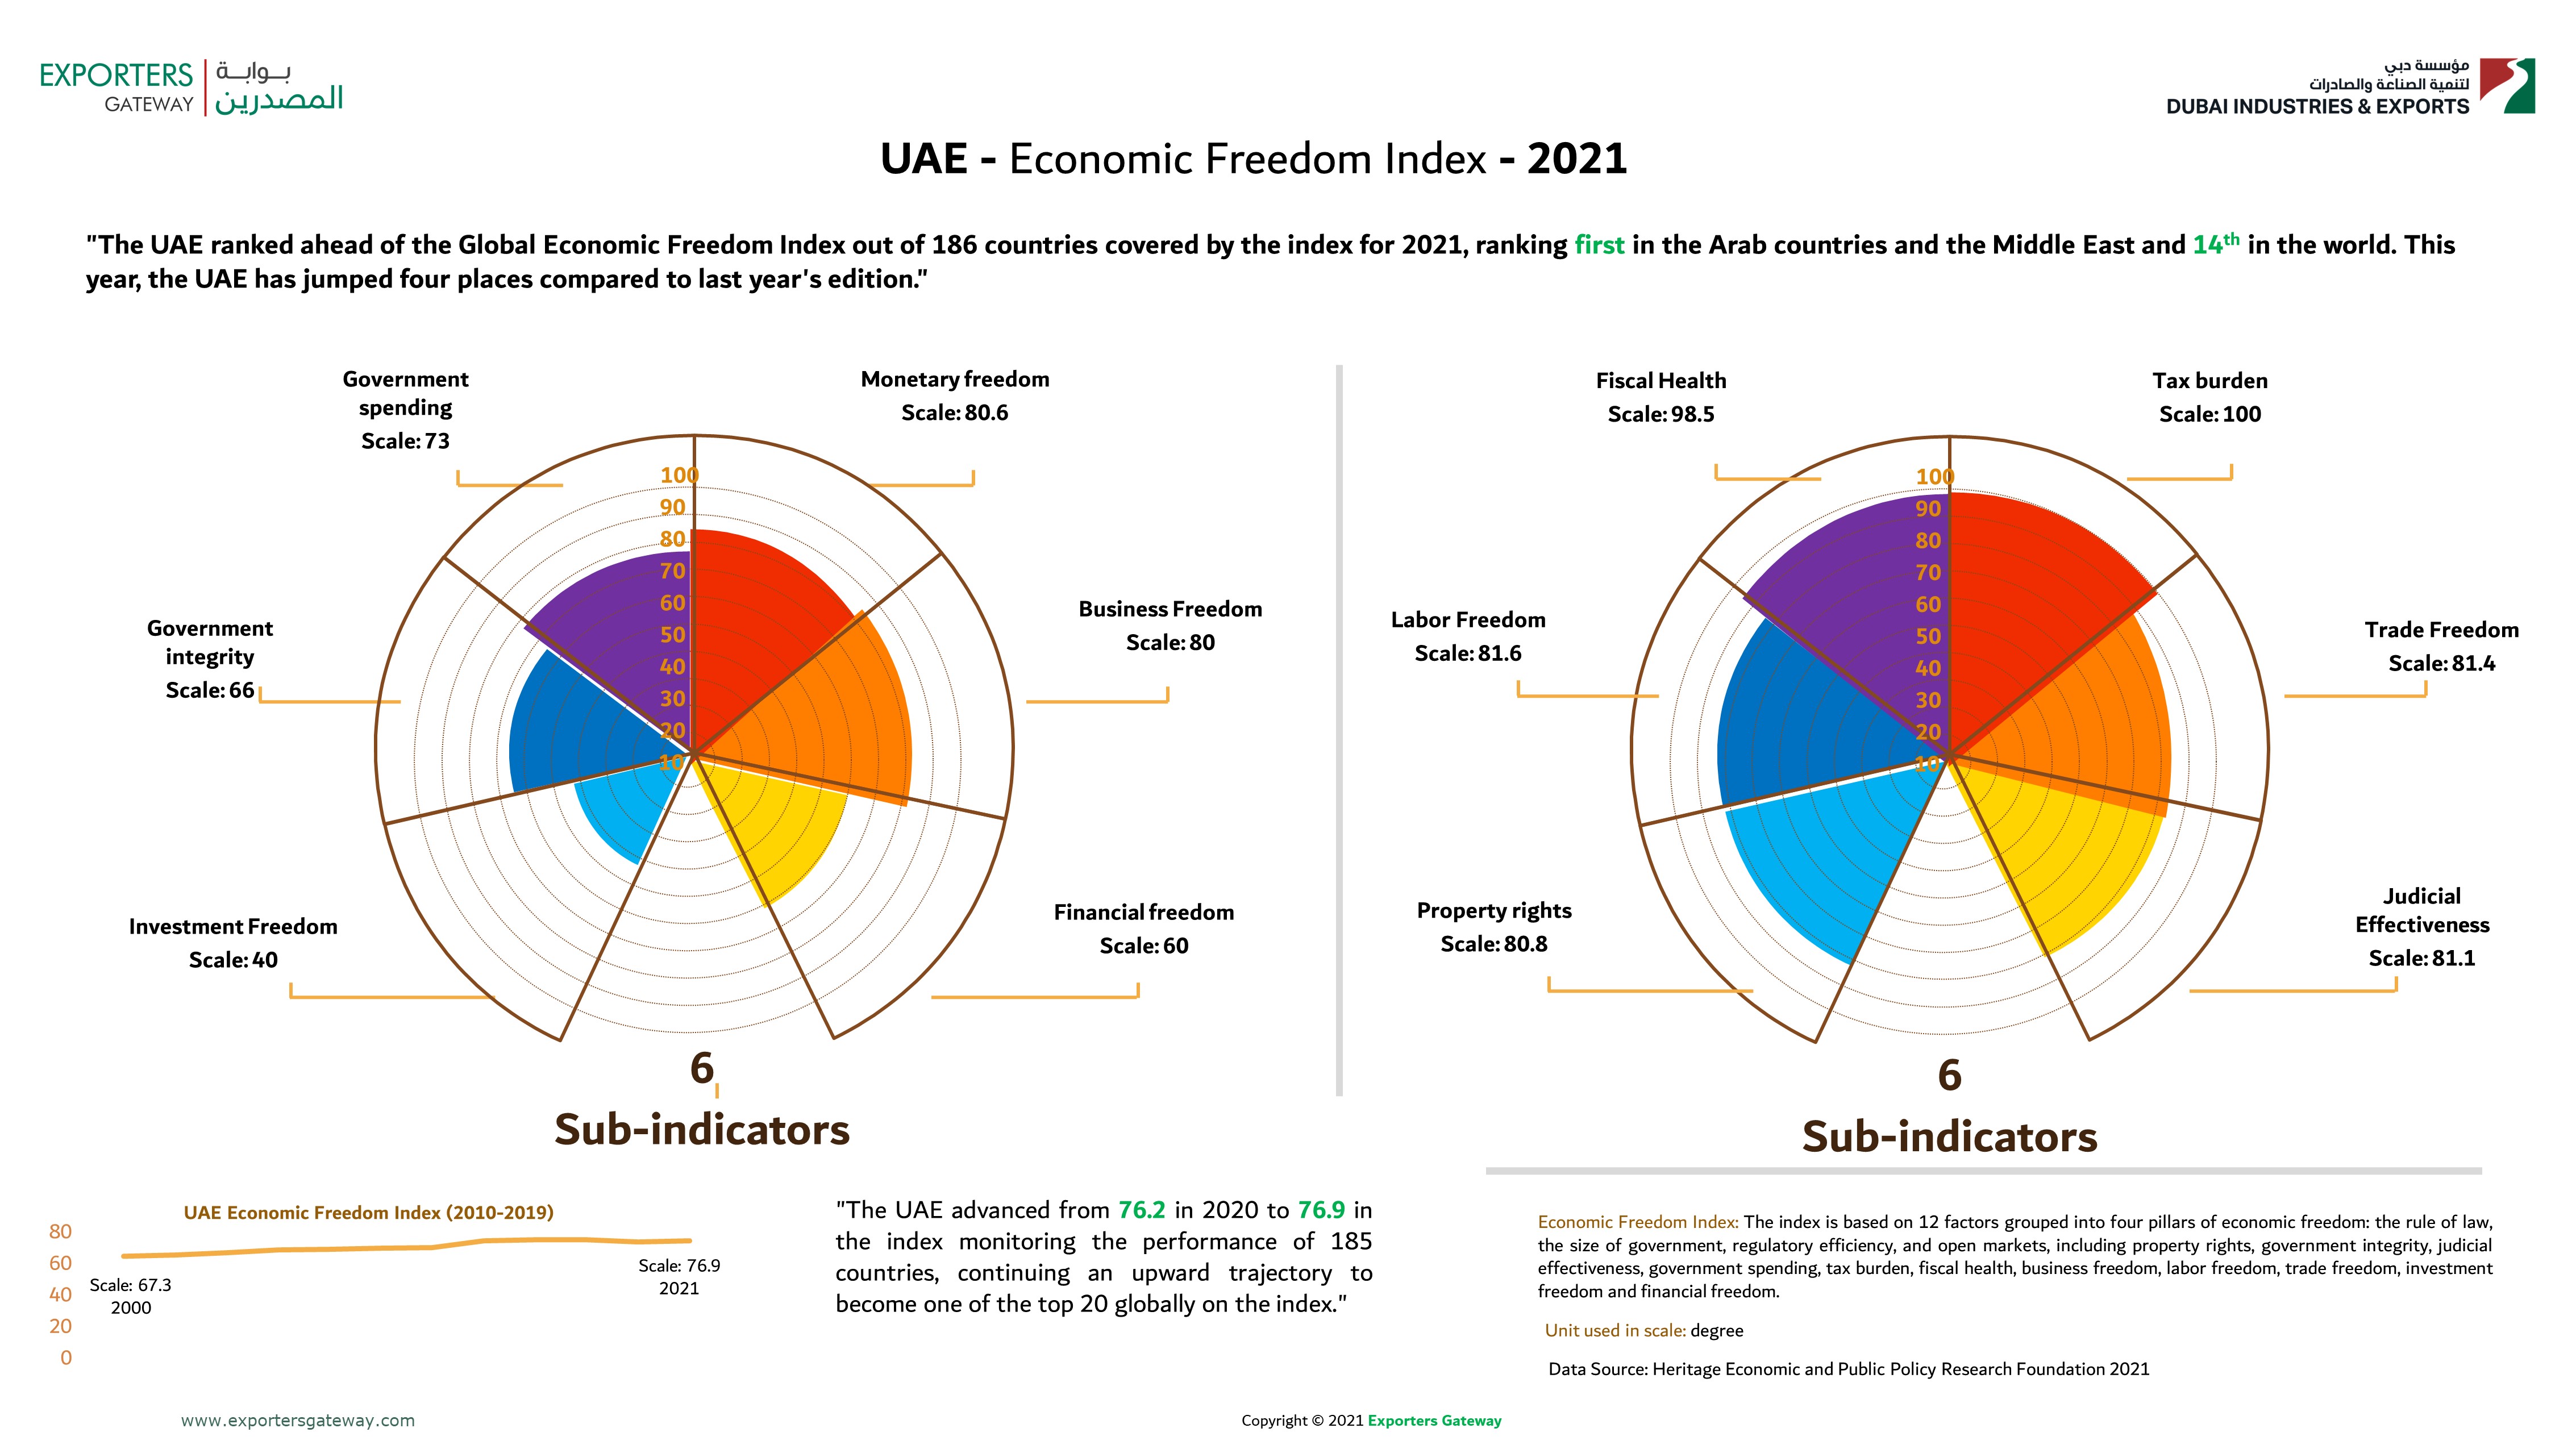  UAE - Economic Freedom Index - 2021